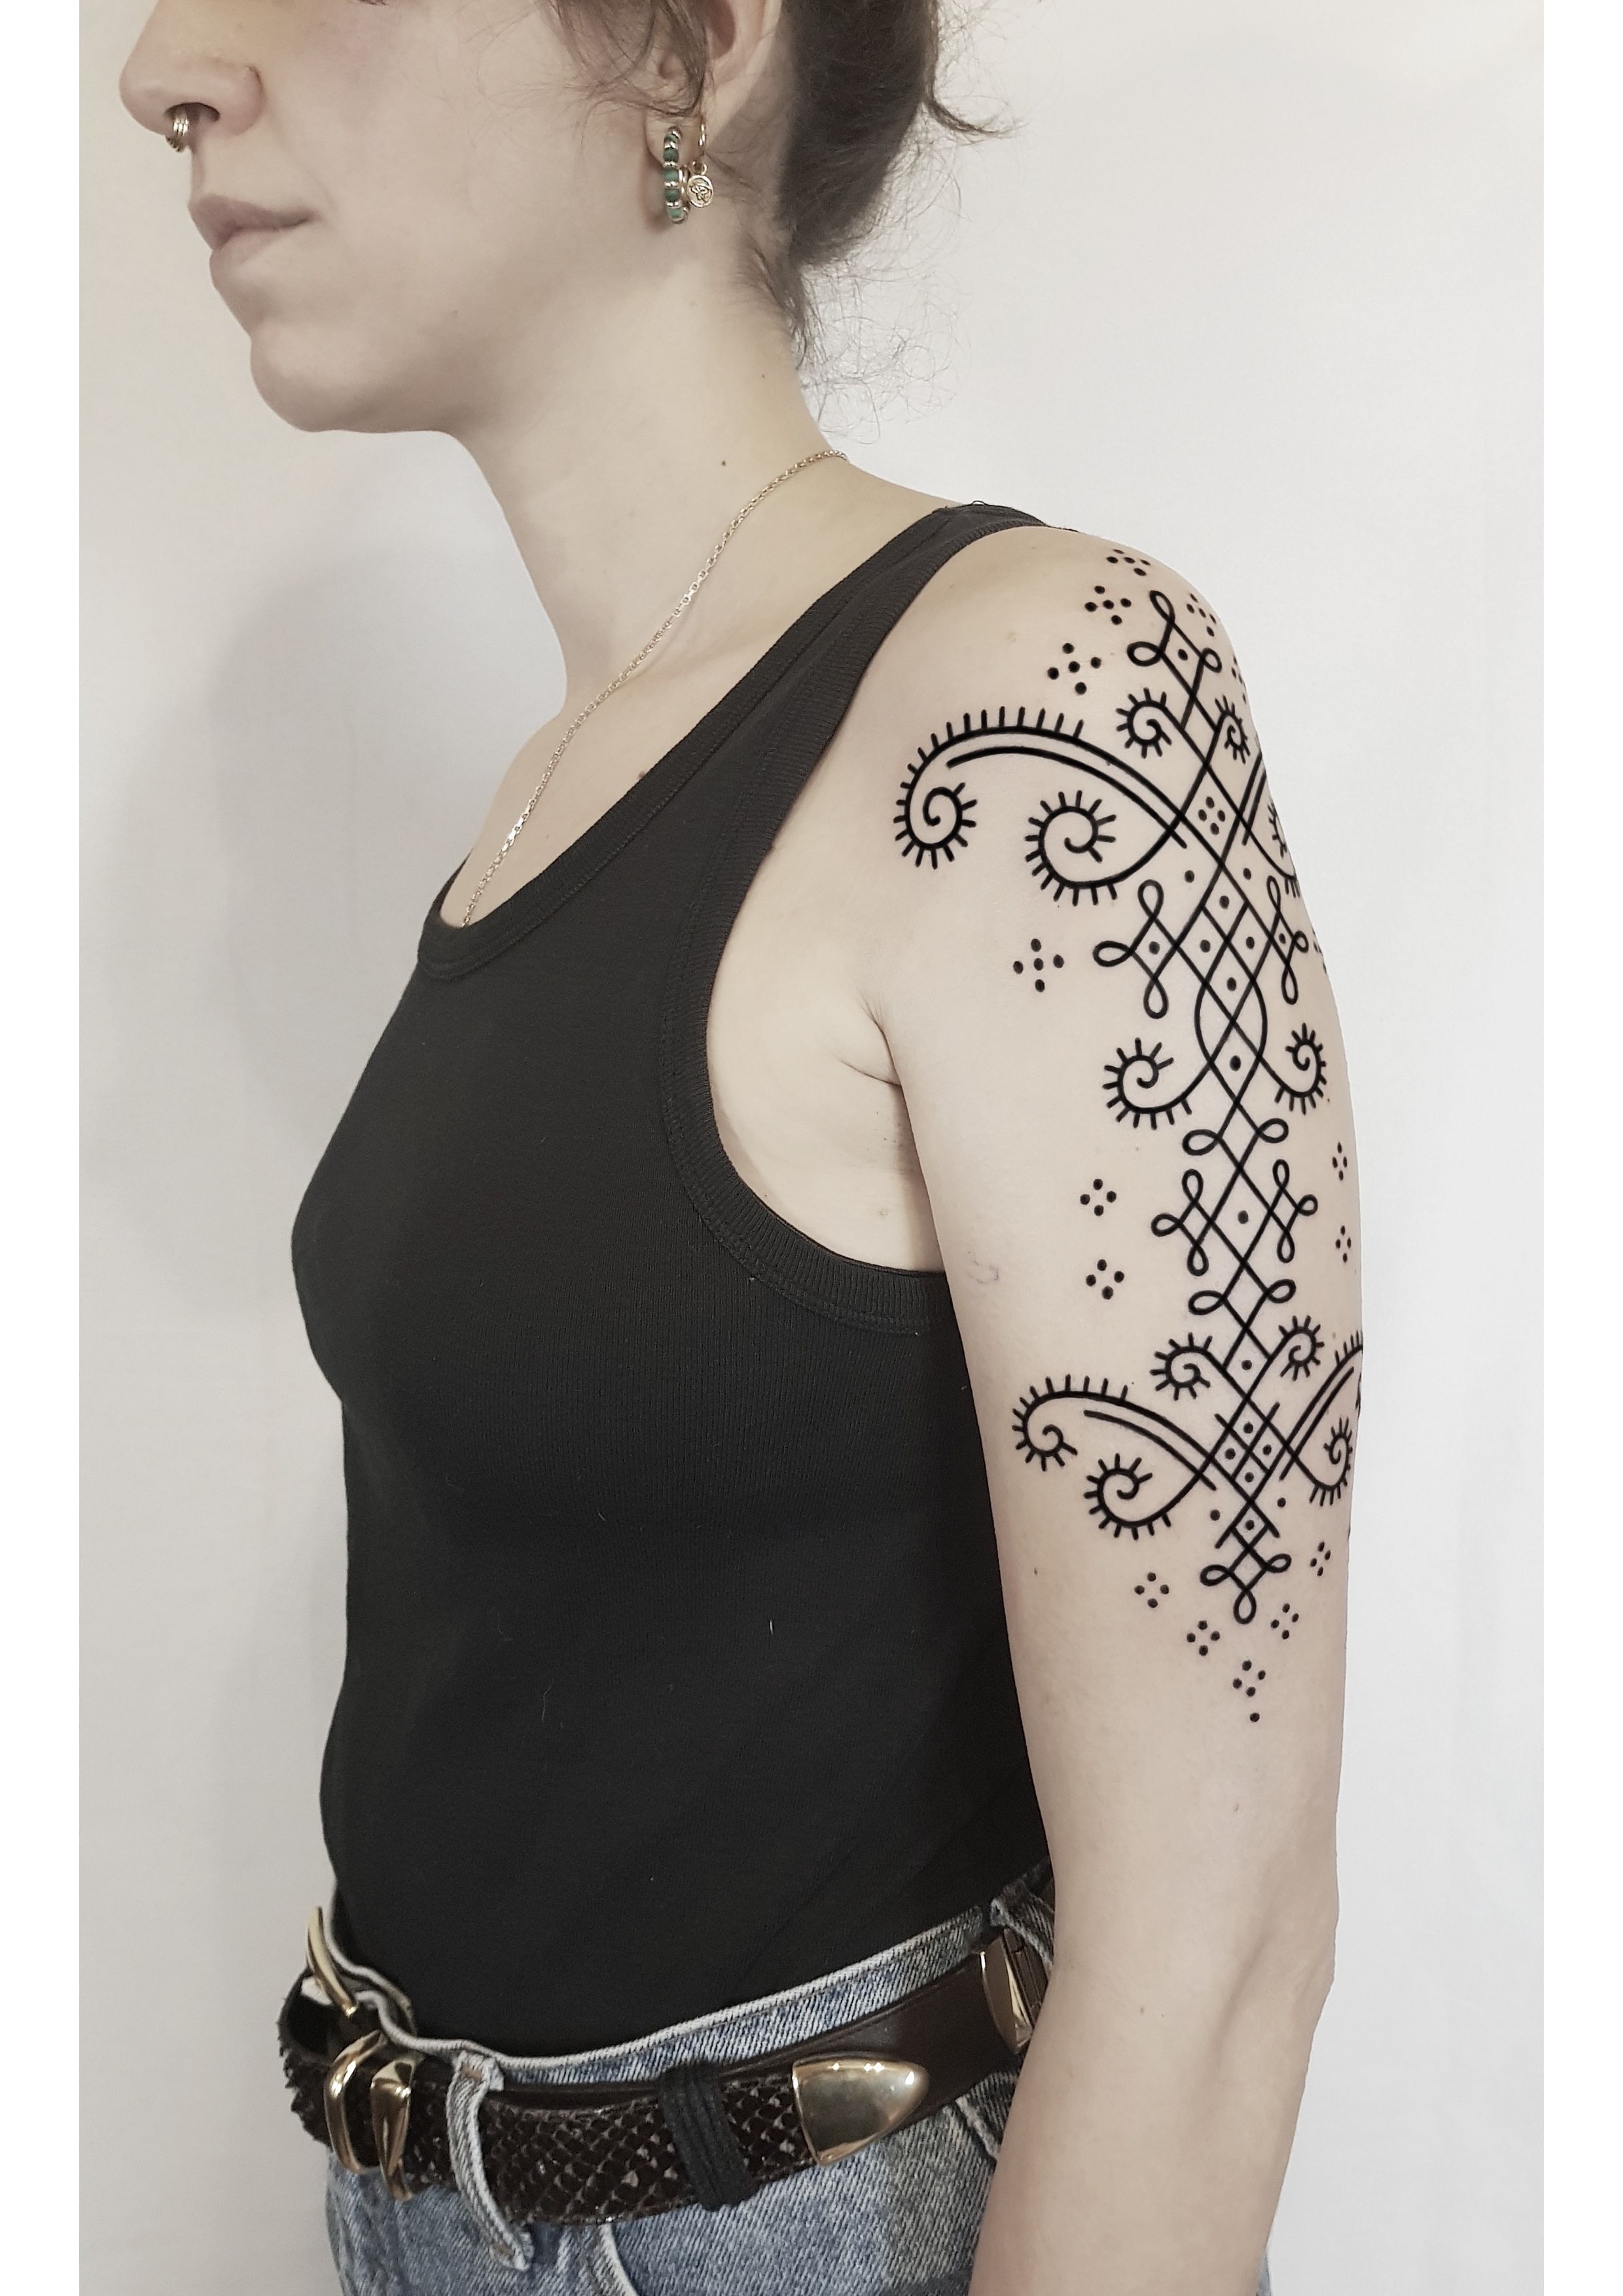 Berber/Amazigh Inspired tattoo by Mohndi | Tattoos, Polynesian tattoo,  Berber